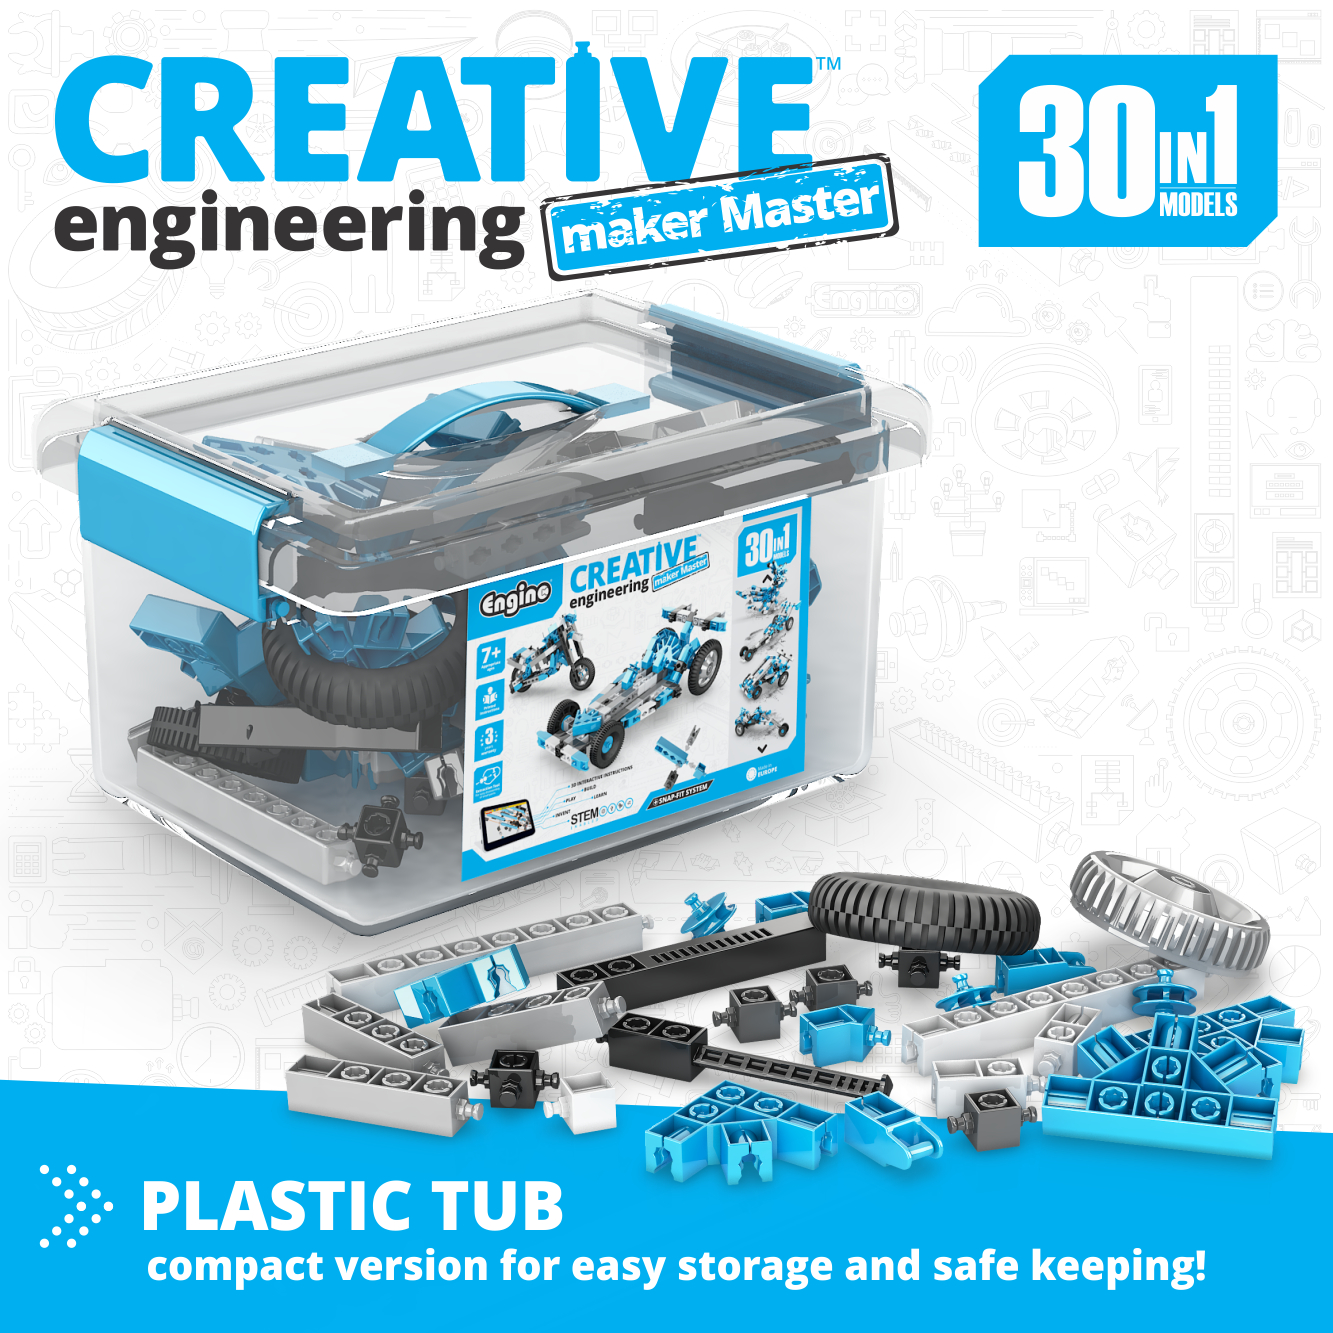 Creative Engineering 30 in 1 Maker Master Set